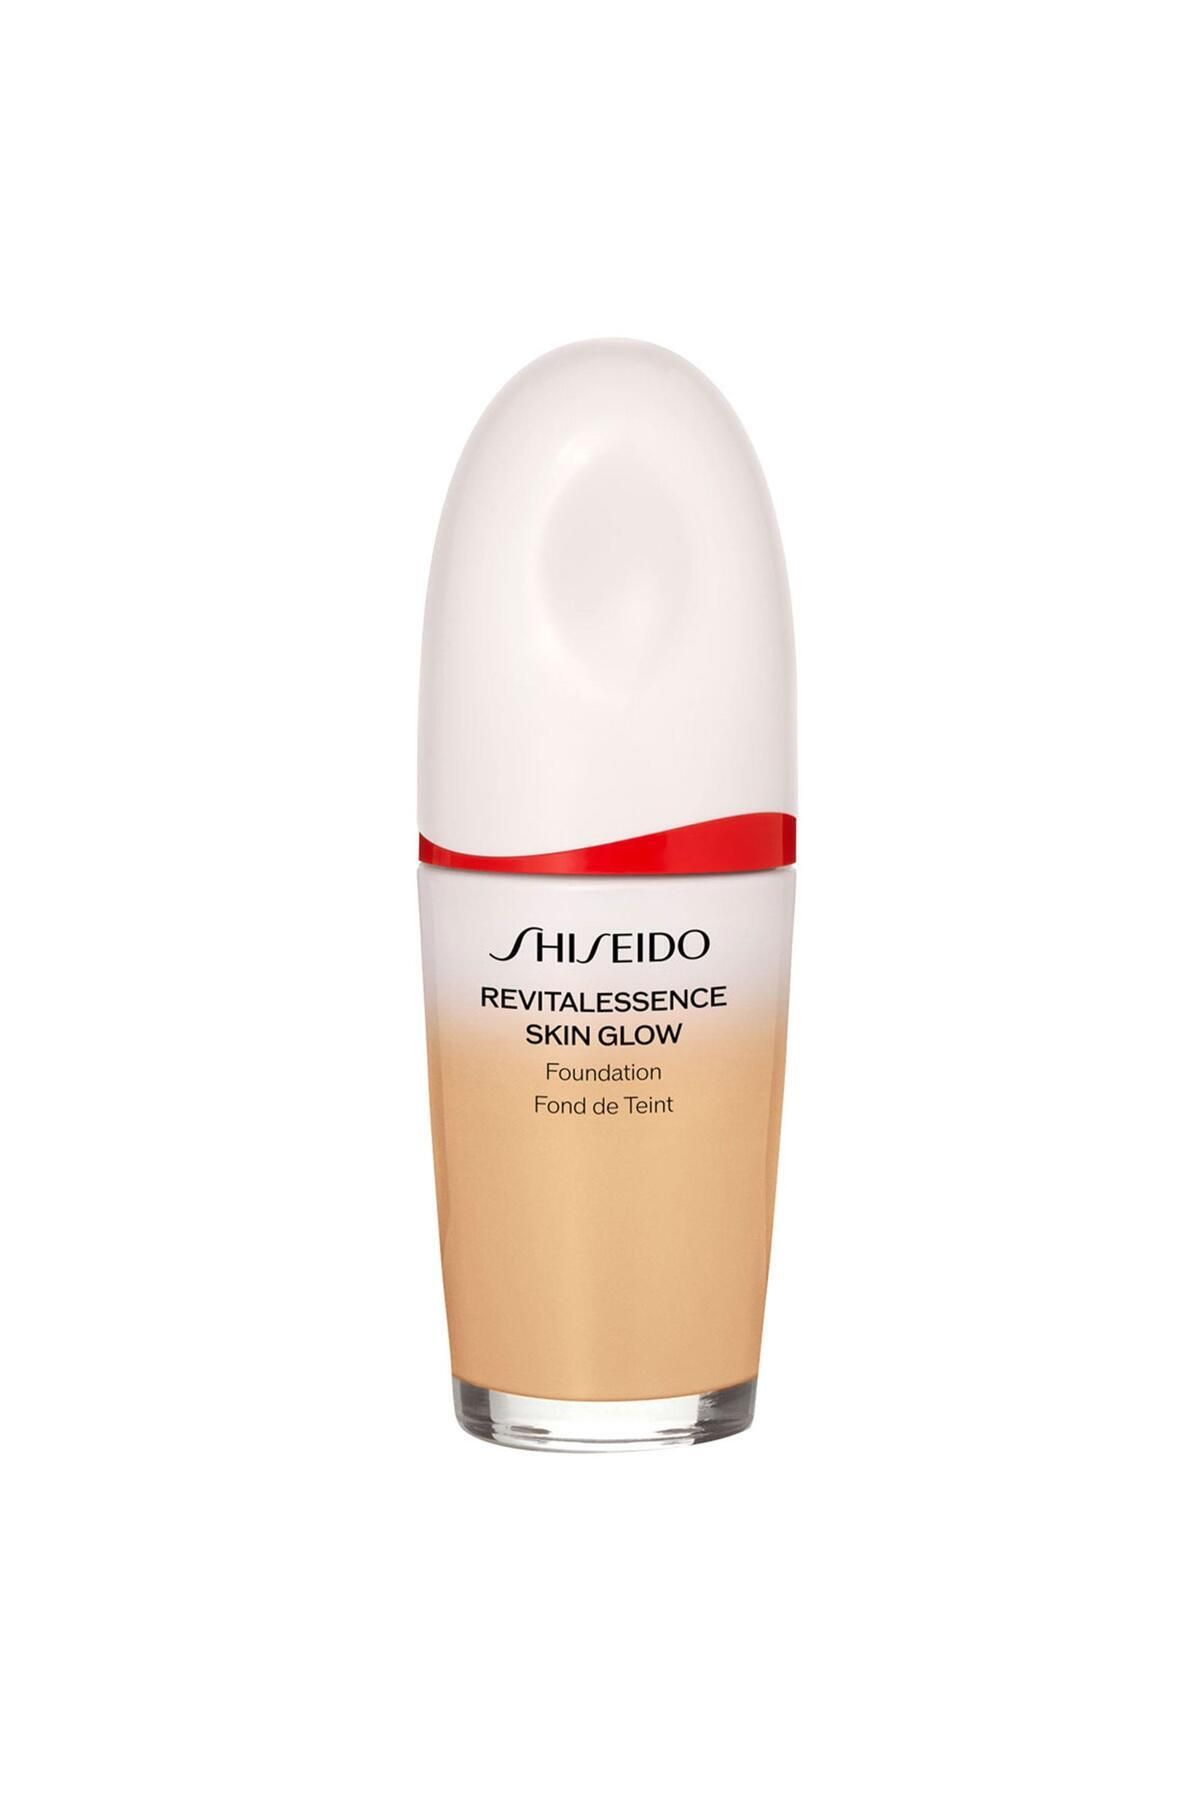 Shiseido Revıtalessence Skın Glow Foundatıon Spf 30 Pa 230